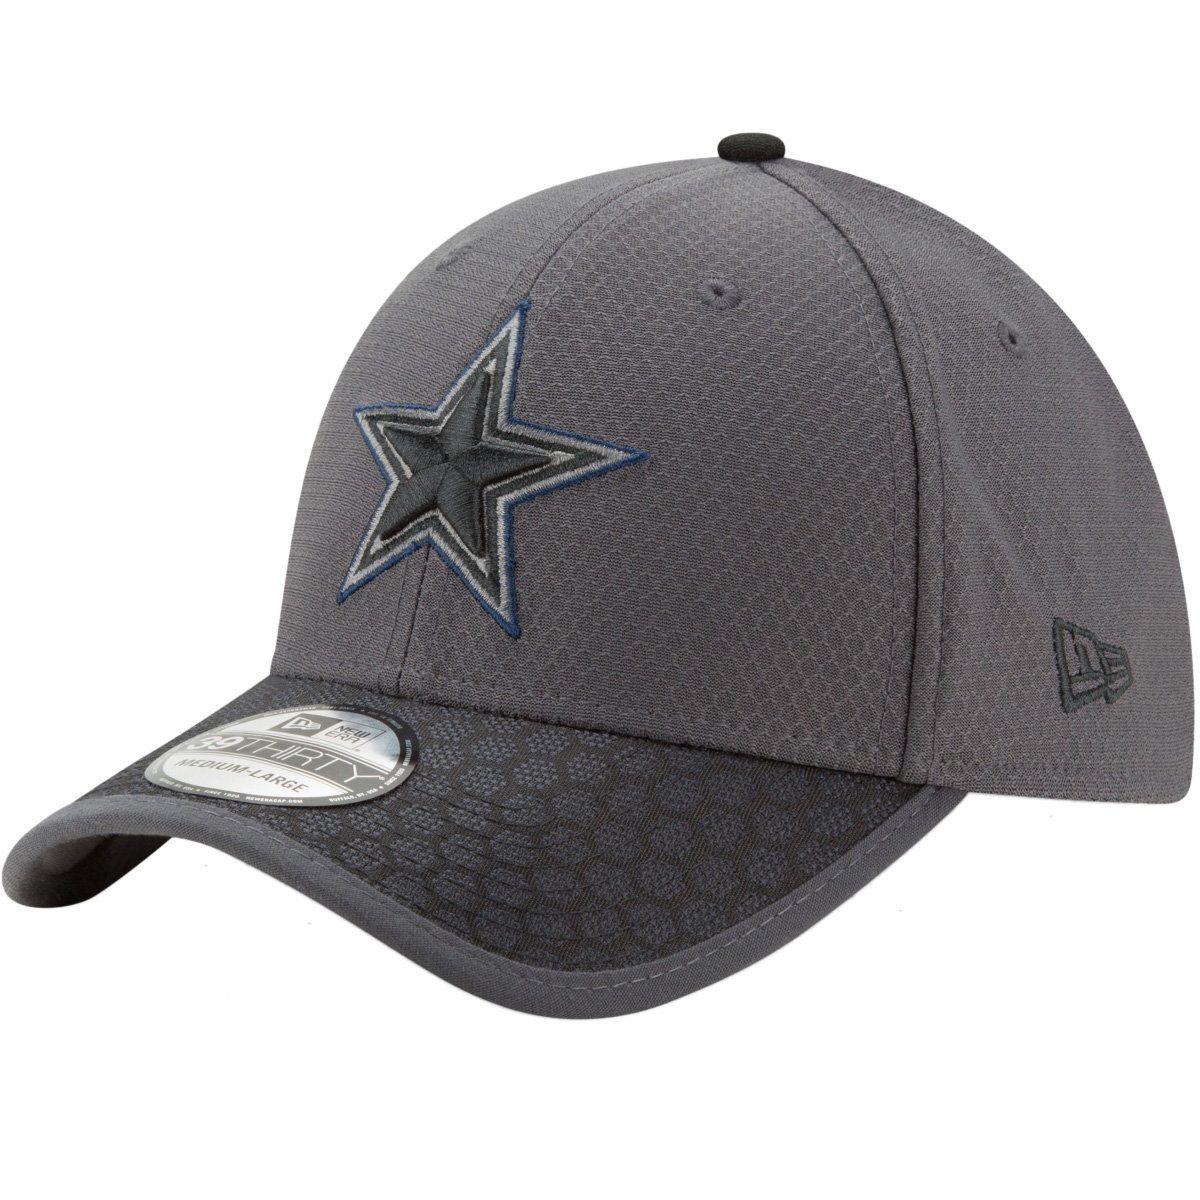 Dallas New Cap SIDELINE Cowboys Era Flex NFL 39Thirty